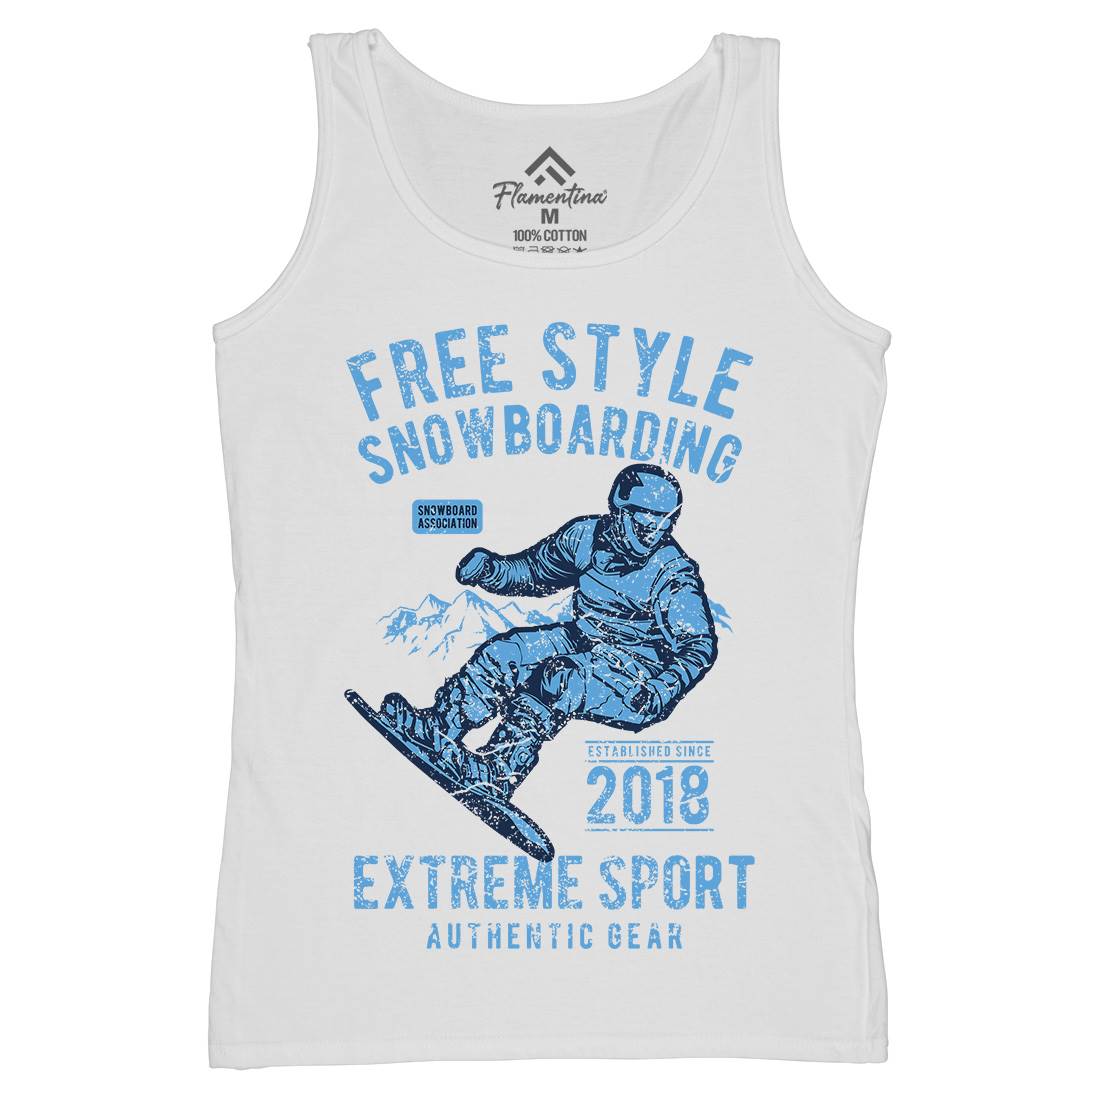 Free Style Snowboarding Womens Organic Tank Top Vest Sport A666